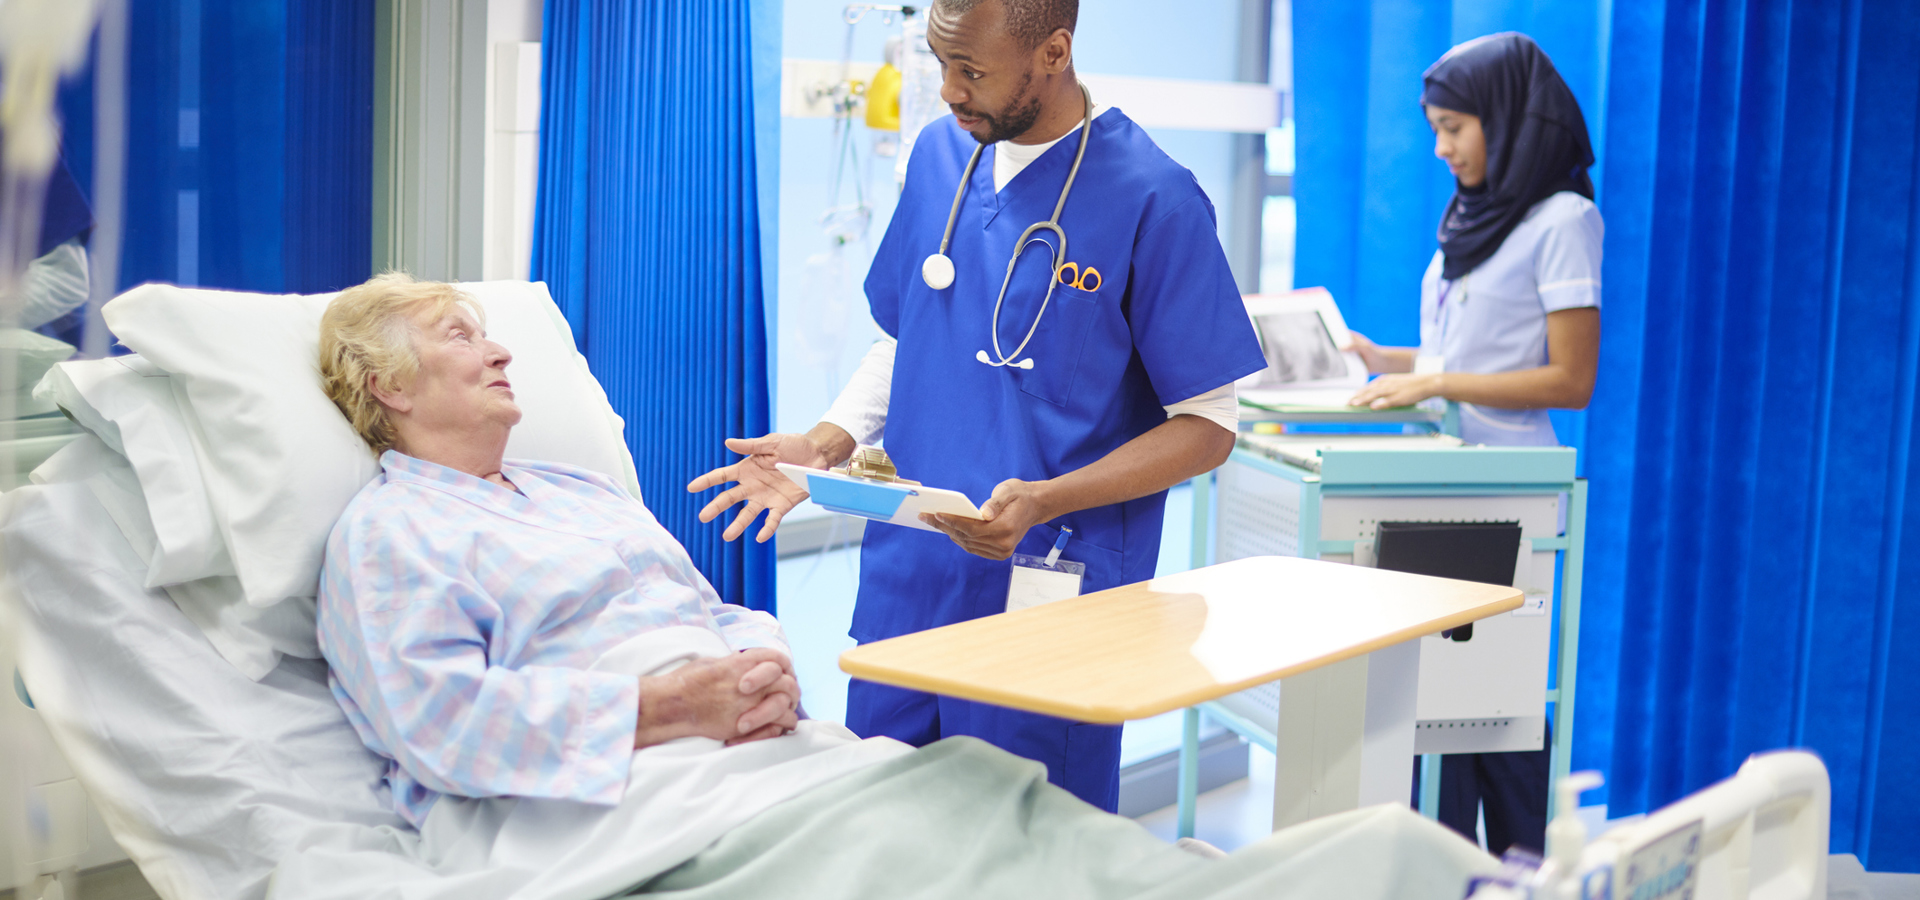 Doctor in hospital scrubs talks to elderly patient 906829760